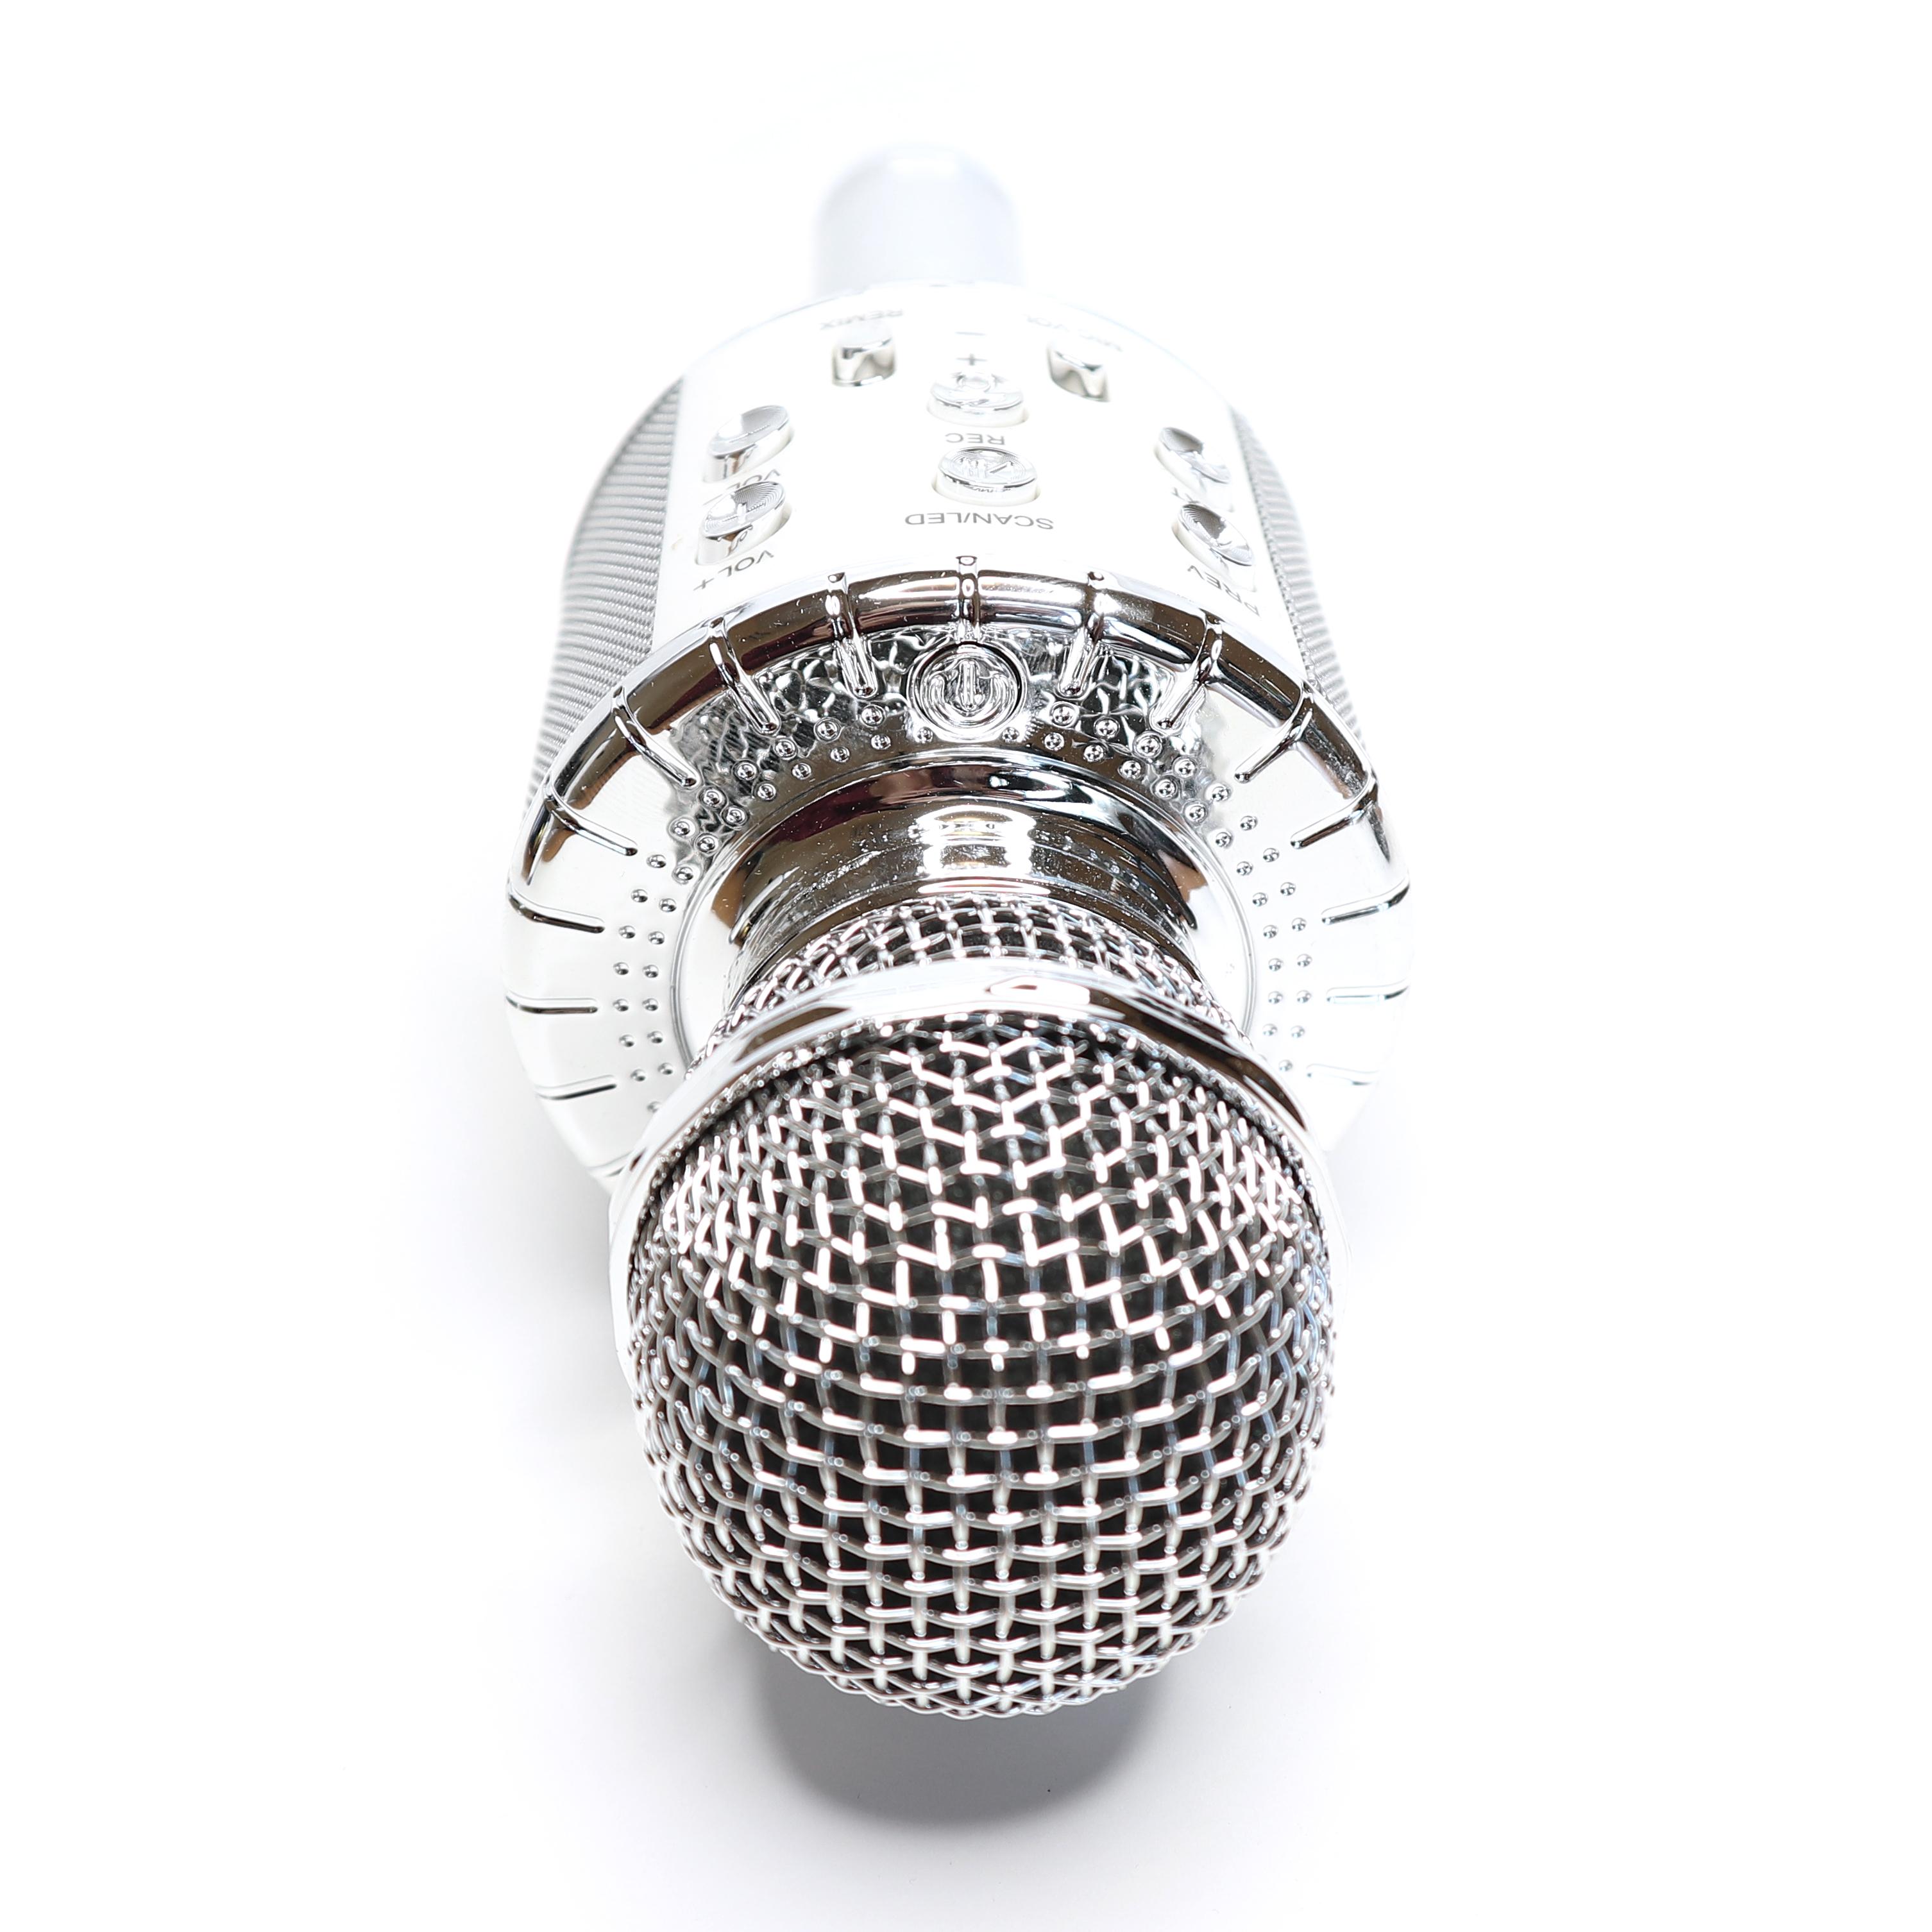 Микрофон для караоке детский с Bluetooth CG iTrendy MUSIC STAR MK2L Silver